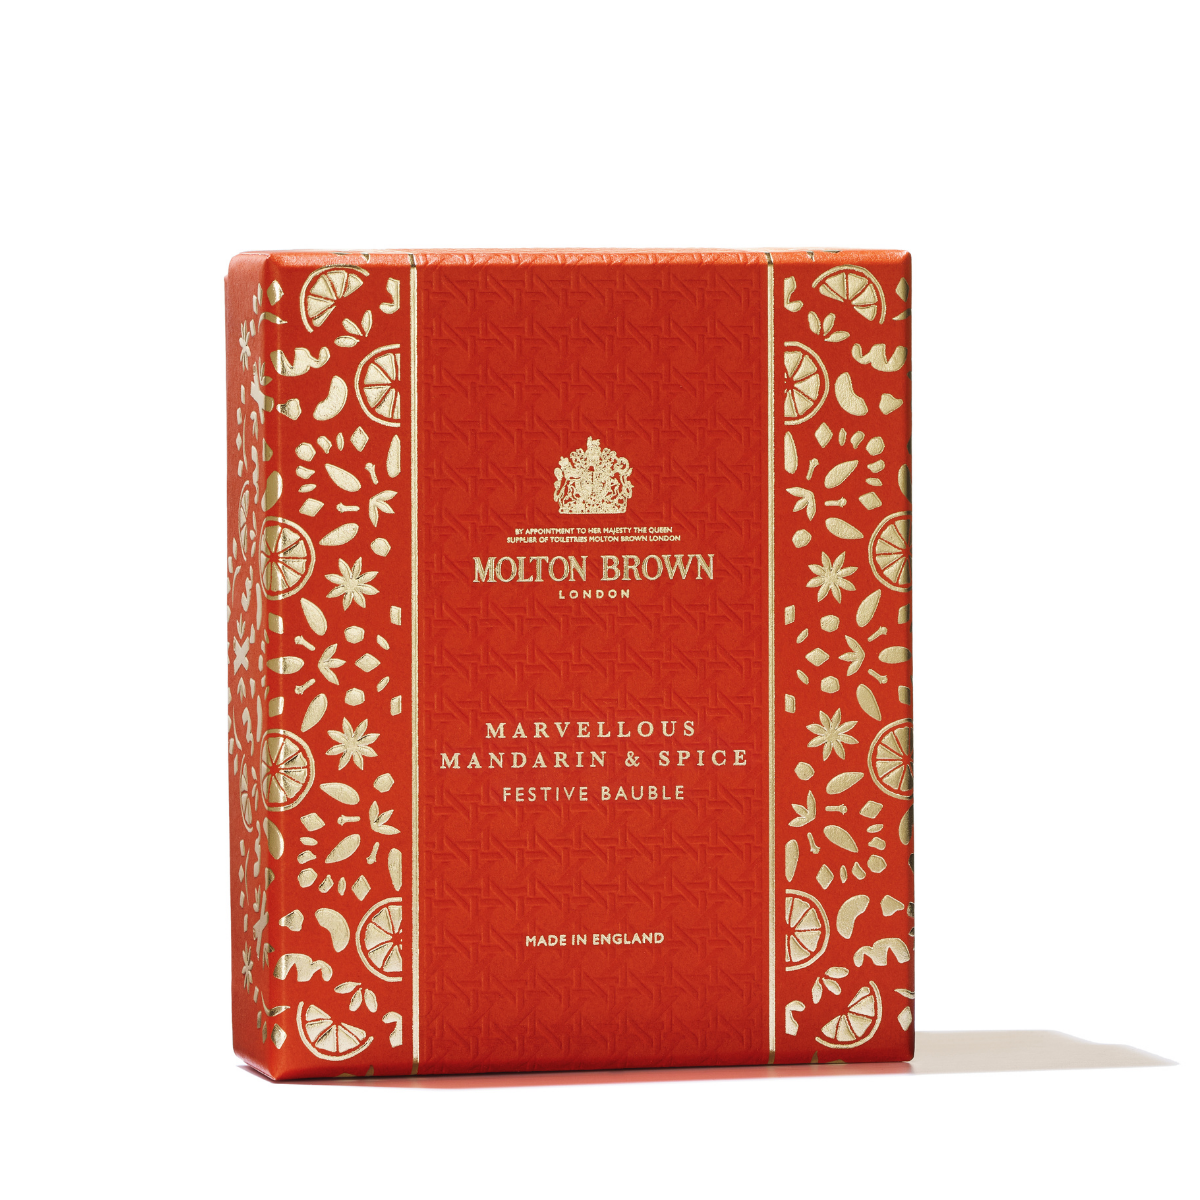 Molton Brown Marvellous Mandarin & Spice Festive Bauble